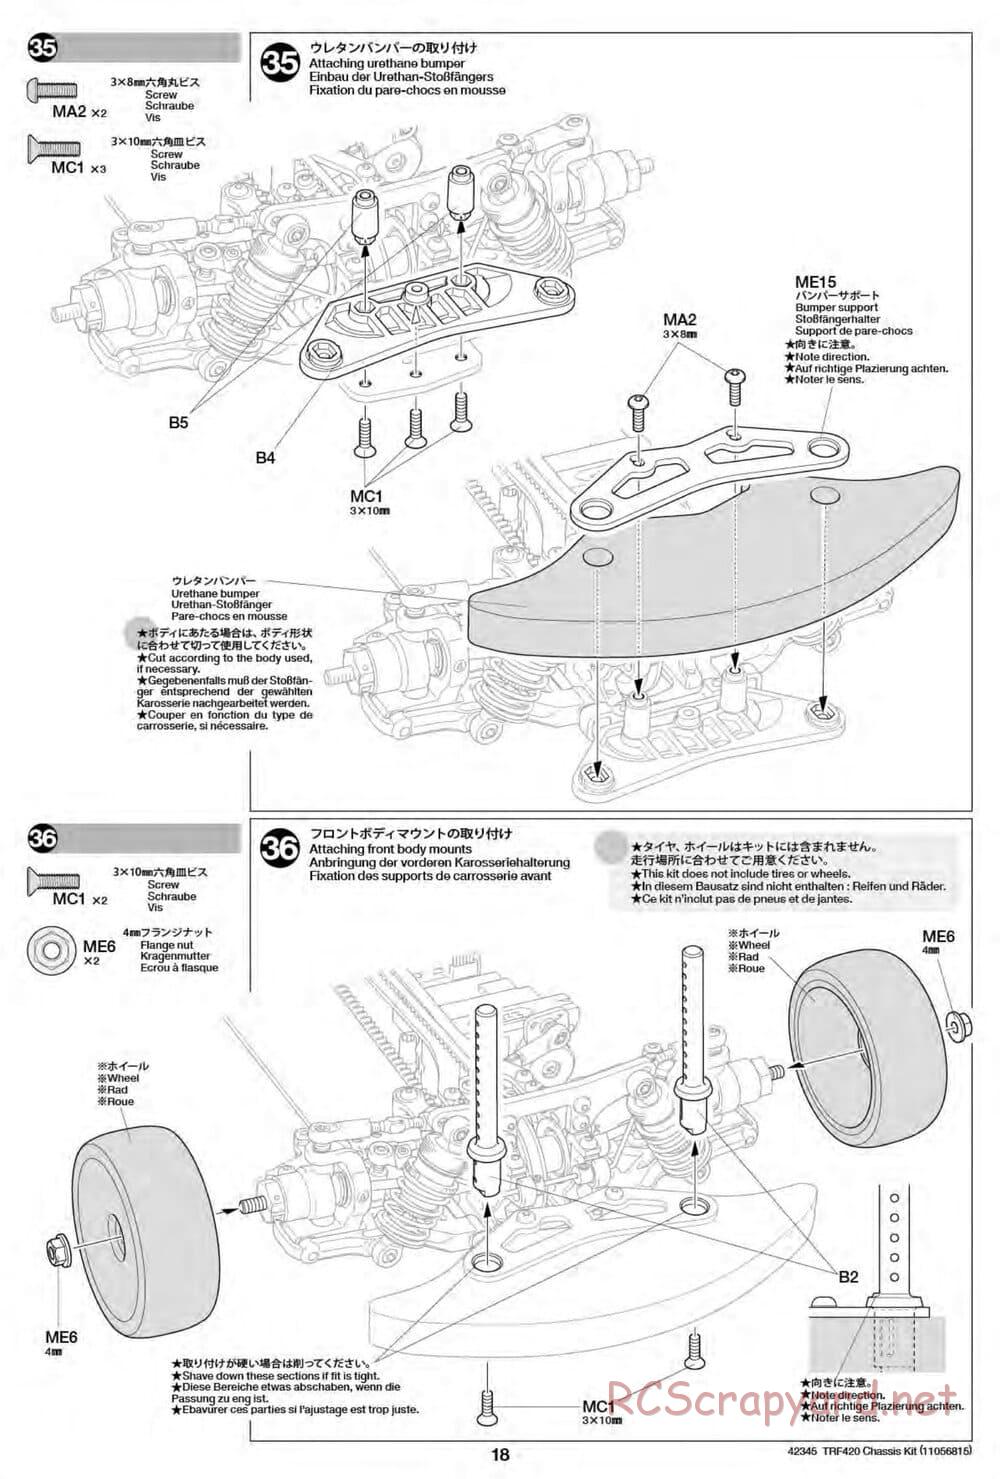 Tamiya - TRF420 Chassis - Manual - Page 18